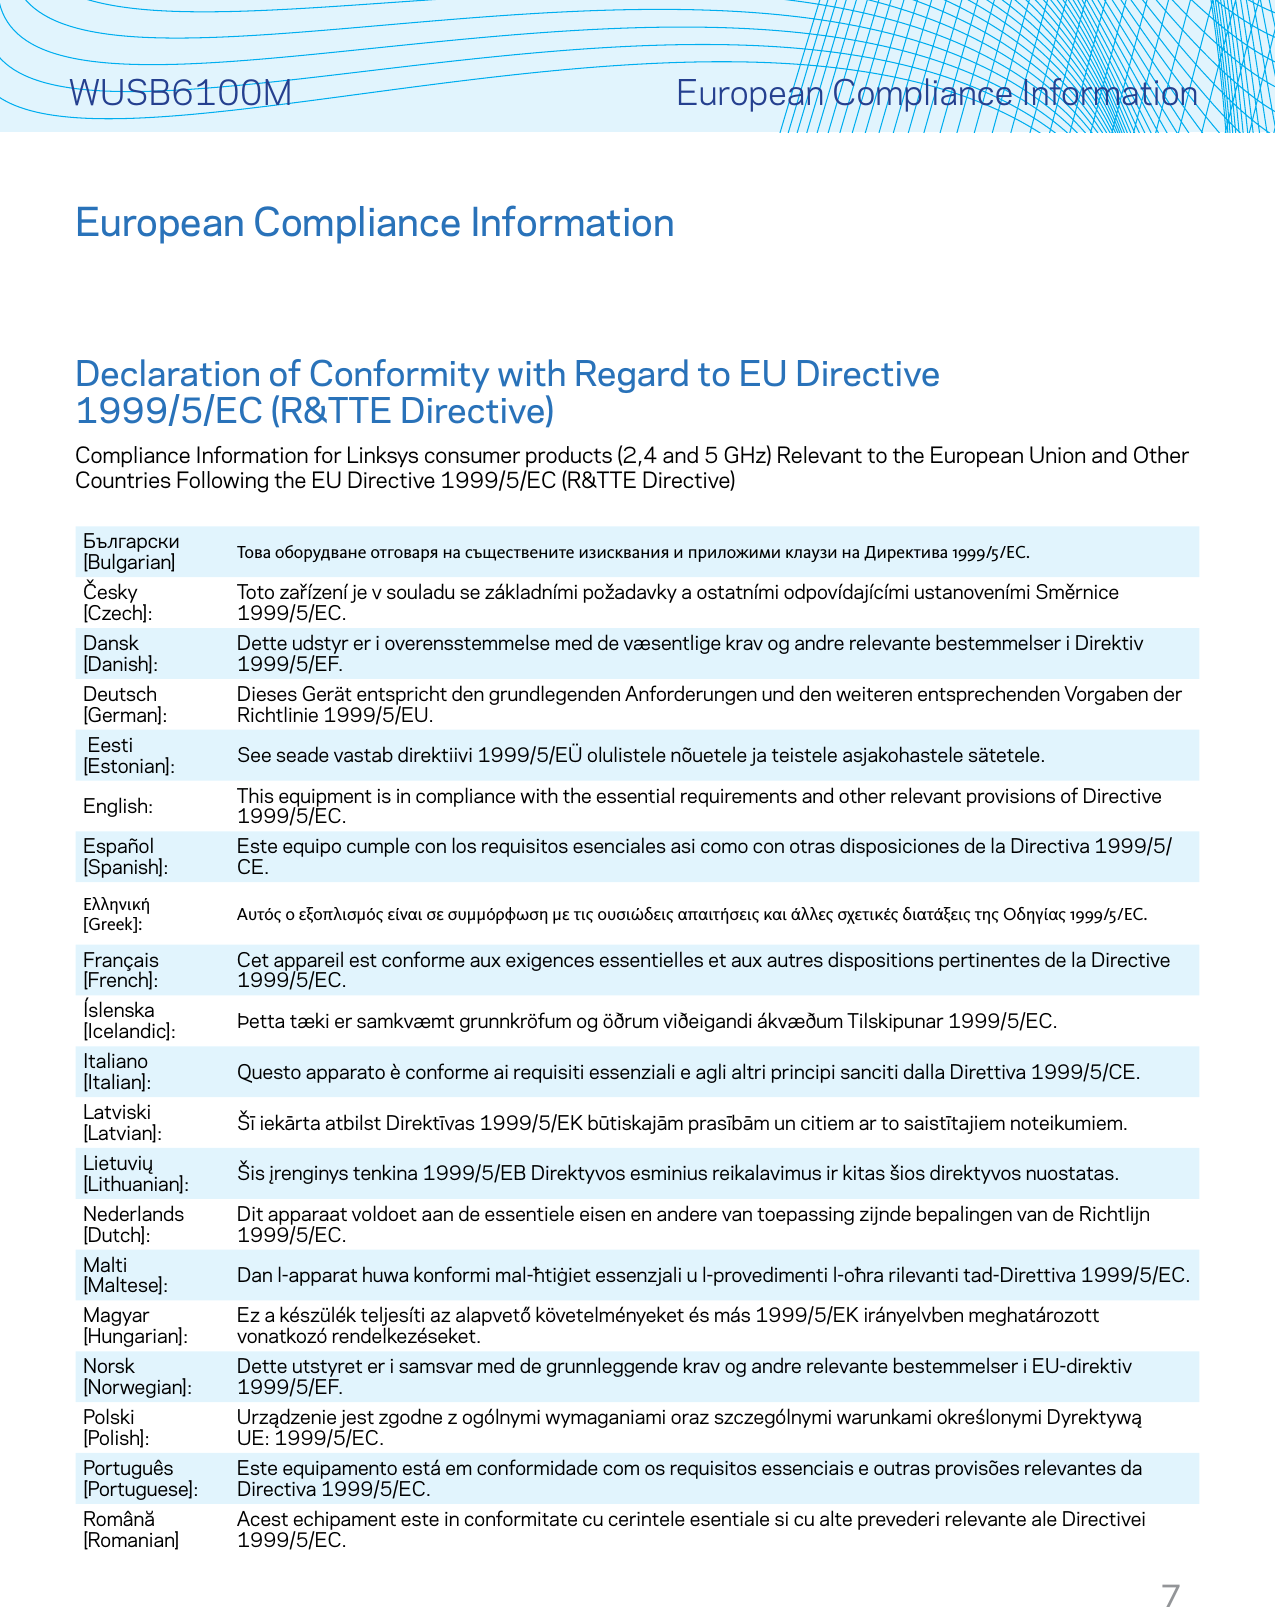 7WUSB6100M European Compliance InformationEuropean Compliance InformationDeclaration of Conformity with Regard to EU Directive 1999/5/EC (R&amp;TTE Directive)Compliance Information for Linksys consumer products (2,4 and 5 GHz) Relevant to the European Union and Other Countries Following the EU Directive 1999/5/EC (R&amp;TTE Directive) Български [Bulgarian] Това оборудване отговаря на съществените изисквания и приложими клаузи на Директива 1999/5/ЕС.Česky [Czech]: Toto zařízení je v souladu se základními požadavky a ostatními odpovídajícími ustanoveními Směrnice 1999/5/EC.Dansk [Danish]: Dette udstyr er i overensstemmelse med de væsentlige krav og andre relevante bestemmelser i Direktiv 1999/5/EF.Deutsch [German]: Dieses Gerät entspricht den grundlegenden Anforderungen und den weiteren entsprechenden Vorgaben der Richtlinie 1999/5/EU. Eesti [Estonian]: See seade vastab direktiivi 1999/5/EÜ olulistele nõuetele ja teistele asjakohastele sätetele.English: This equipment is in compliance with the essential requirements and other relevant provisions of Directive 1999/5/EC.Español [Spanish]: Este equipo cumple con los requisitos esenciales asi como con otras disposiciones de la Directiva 1999/5/CE.Ελληνική [Greek]: Αυτός ο εξοπλισµός είναι σε συµµόρφωση µε τις ουσιώδεις απαιτήσεις και άλλες σχετικές διατάξεις της Οδηγίας 1999/5/EC.Français [French]: Cet appareil est conforme aux exigences essentielles et aux autres dispositions pertinentes de la Directive 1999/5/EC.Íslenska [Icelandic]: Þetta tæki er samkvæmt grunnkröfum og öðrum viðeigandi ákvæðum Tilskipunar 1999/5/EC.Italiano [Italian]: Questo apparato è conforme ai requisiti essenziali e agli altri principi sanciti dalla Direttiva 1999/5/CE.Latviski [Latvian]: Šī iekārta atbilst Direktīvas 1999/5/EK būtiskajām prasībām un citiem ar to saistītajiem noteikumiem.Lietuvių [Lithuanian]: Šis įrenginys tenkina 1999/5/EB Direktyvos esminius reikalavimus ir kitas šios direktyvos nuostatas.Nederlands[Dutch]: Dit apparaat voldoet aan de essentiele eisen en andere van toepassing zijnde bepalingen van de Richtlijn 1999/5/EC.Malti [Maltese]: Dan l-apparat huwa konformi mal-ħtiġiet essenzjali u l-provedimenti l-oħra rilevanti tad-Direttiva 1999/5/EC.Magyar[Hungarian]: Ez a készülék teljesíti az alapvető követelményeket és más 1999/5/EK irányelvben meghatározott vonatkozó rendelkezéseket.Norsk[Norwegian]: Dette utstyret er i samsvar med de grunnleggende krav og andre relevante bestemmelser i EU-direktiv 1999/5/EF.Polski [Polish]: Urządzenie jest zgodne z ogólnymi wymaganiami oraz szczególnymi warunkami określonymi Dyrektywą UE: 1999/5/EC.Português [Portuguese]: Este equipamento está em conformidade com os requisitos essenciais e outras provisões relevantes da Directiva 1999/5/EC.Română [Romanian] Acest echipament este in conformitate cu cerintele esentiale si cu alte prevederi relevante ale Directivei 1999/5/EC.